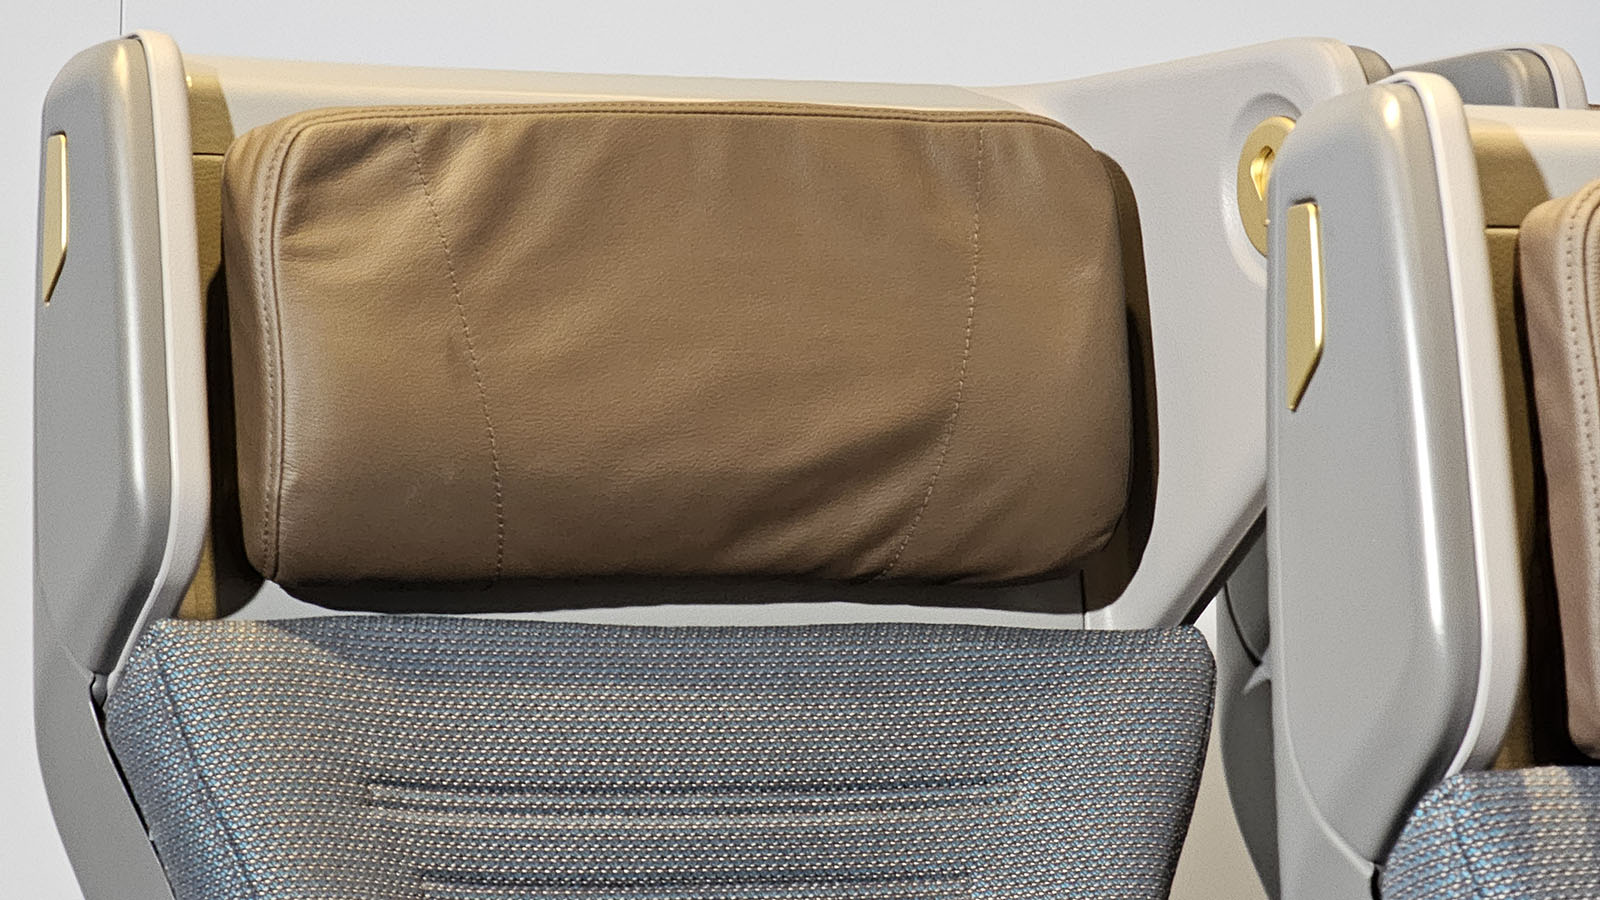 Cushion in Cathay Pacific's new Premium Economy